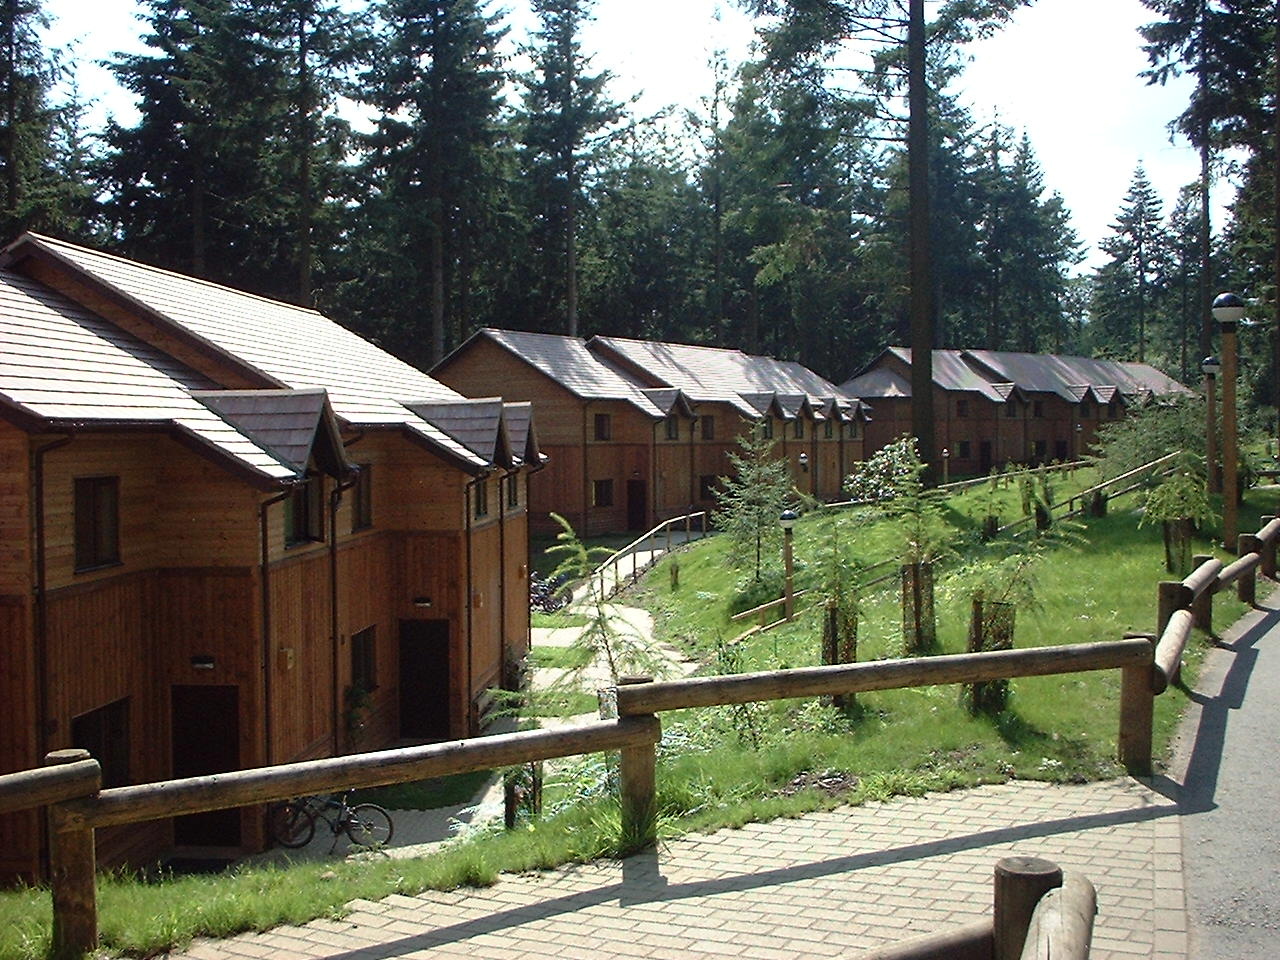 Executive accomodation, Center Parcs, Longleat Forest